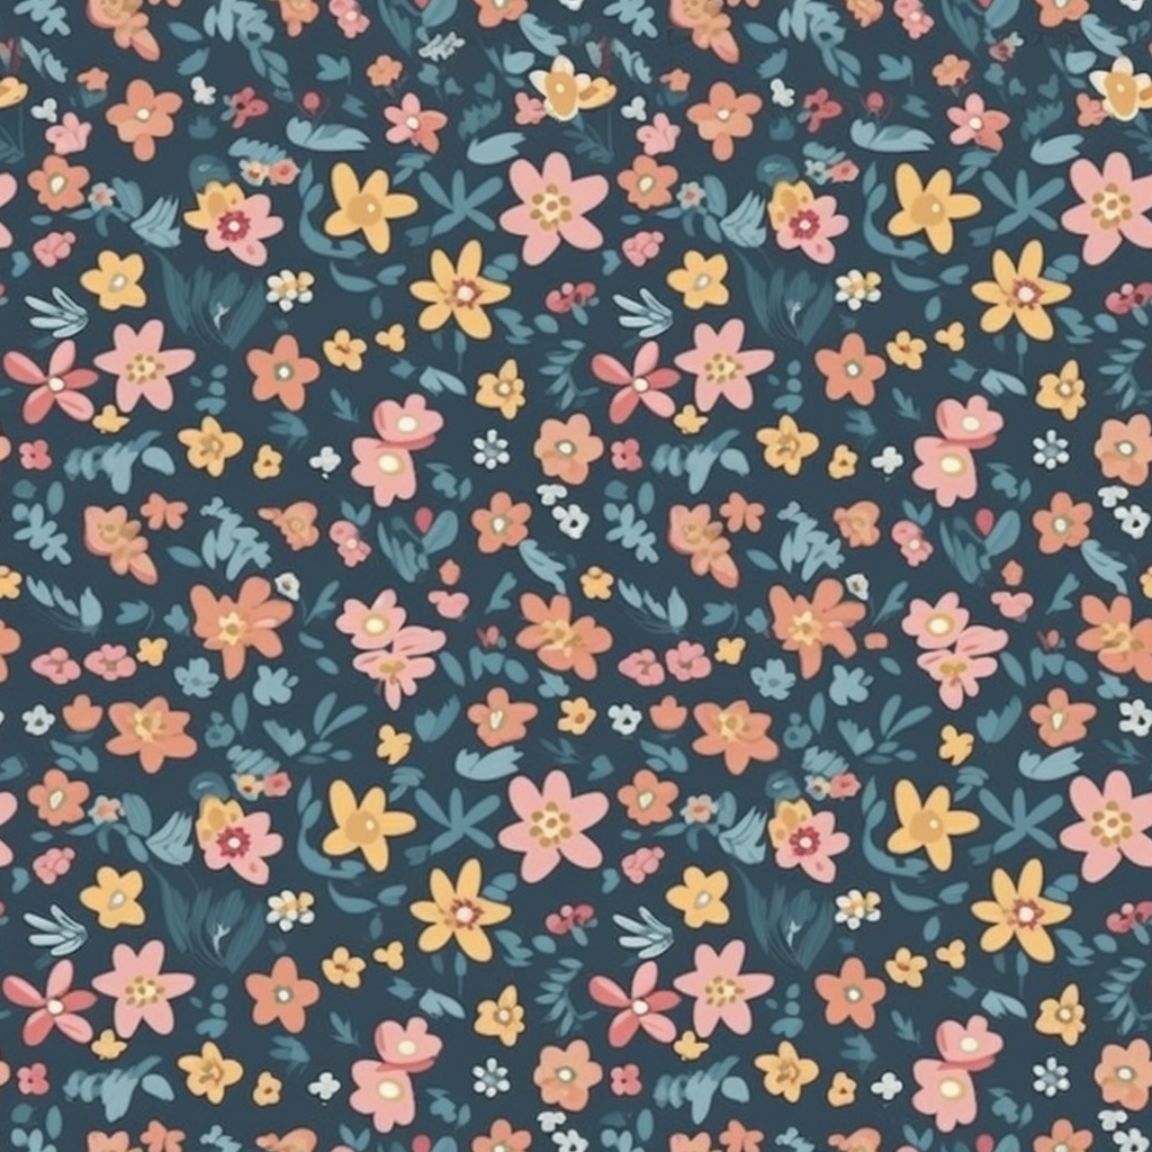 Classic Floral Easter Digital Paper Bundle - 10 Seamless Patterns